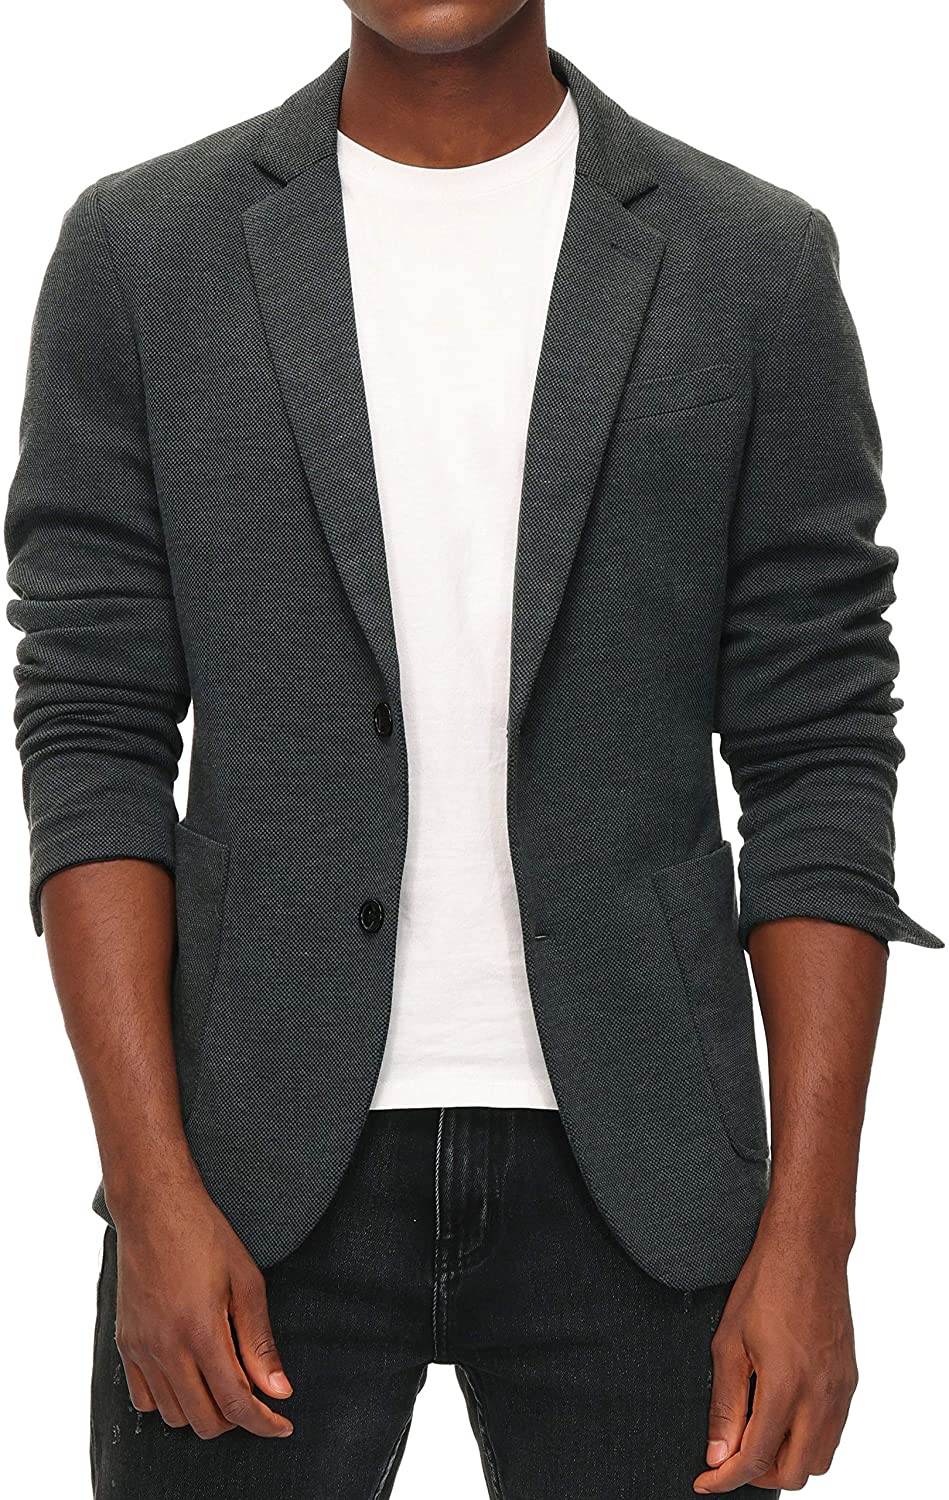 PJ Paul Jones Men's Casual Knit Blazer Suit Jacket